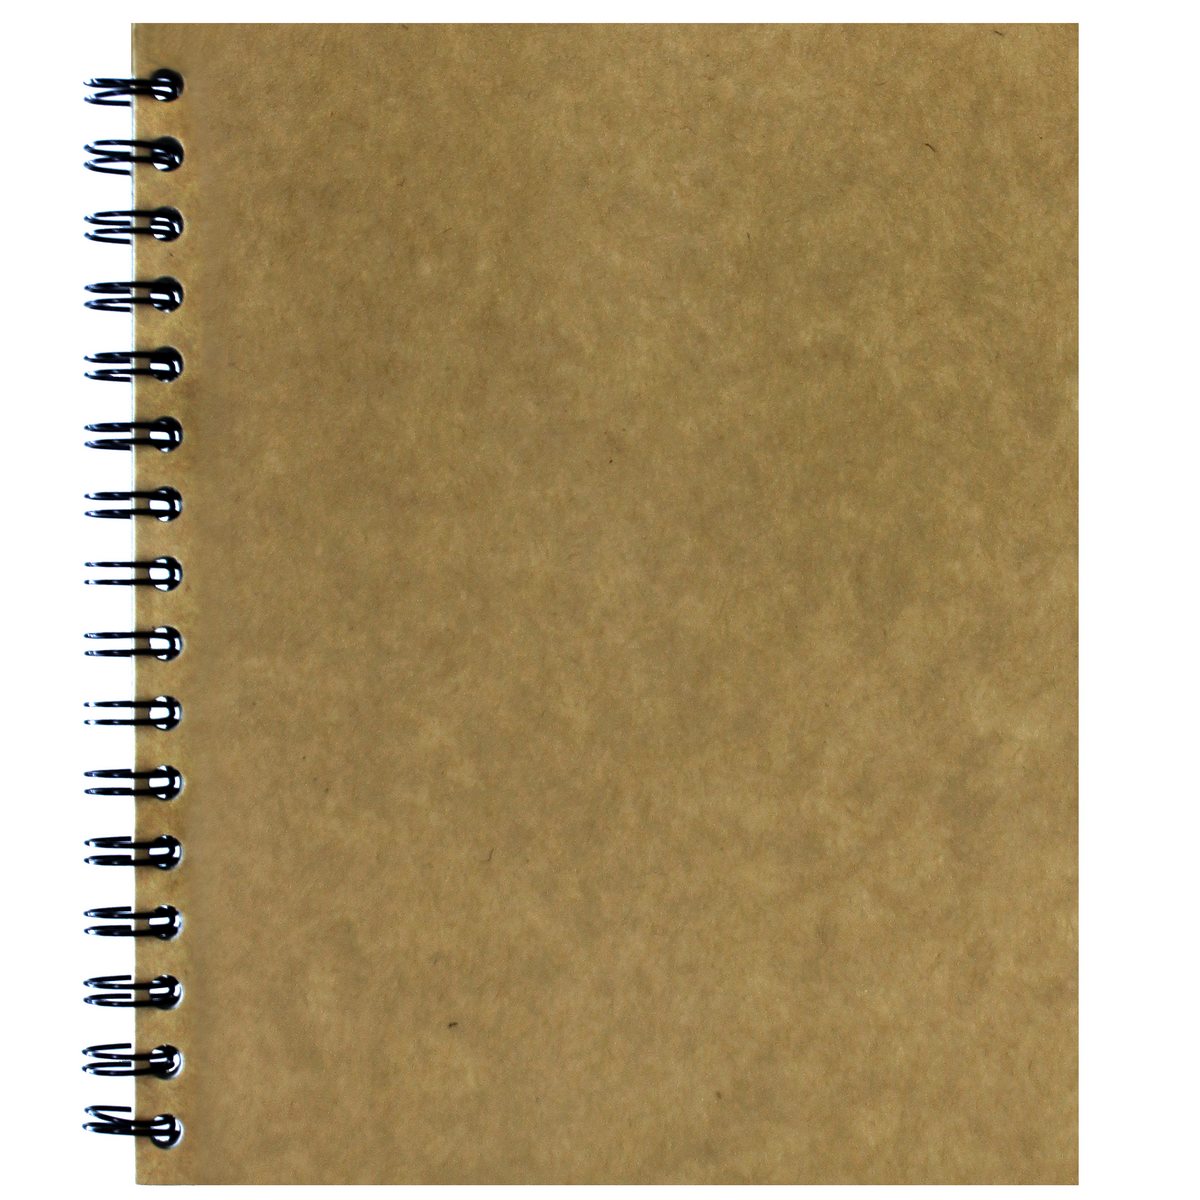 jags-mumbai Sketching Material A5 Brown Paper Sketch book, Eco friendly sketch book